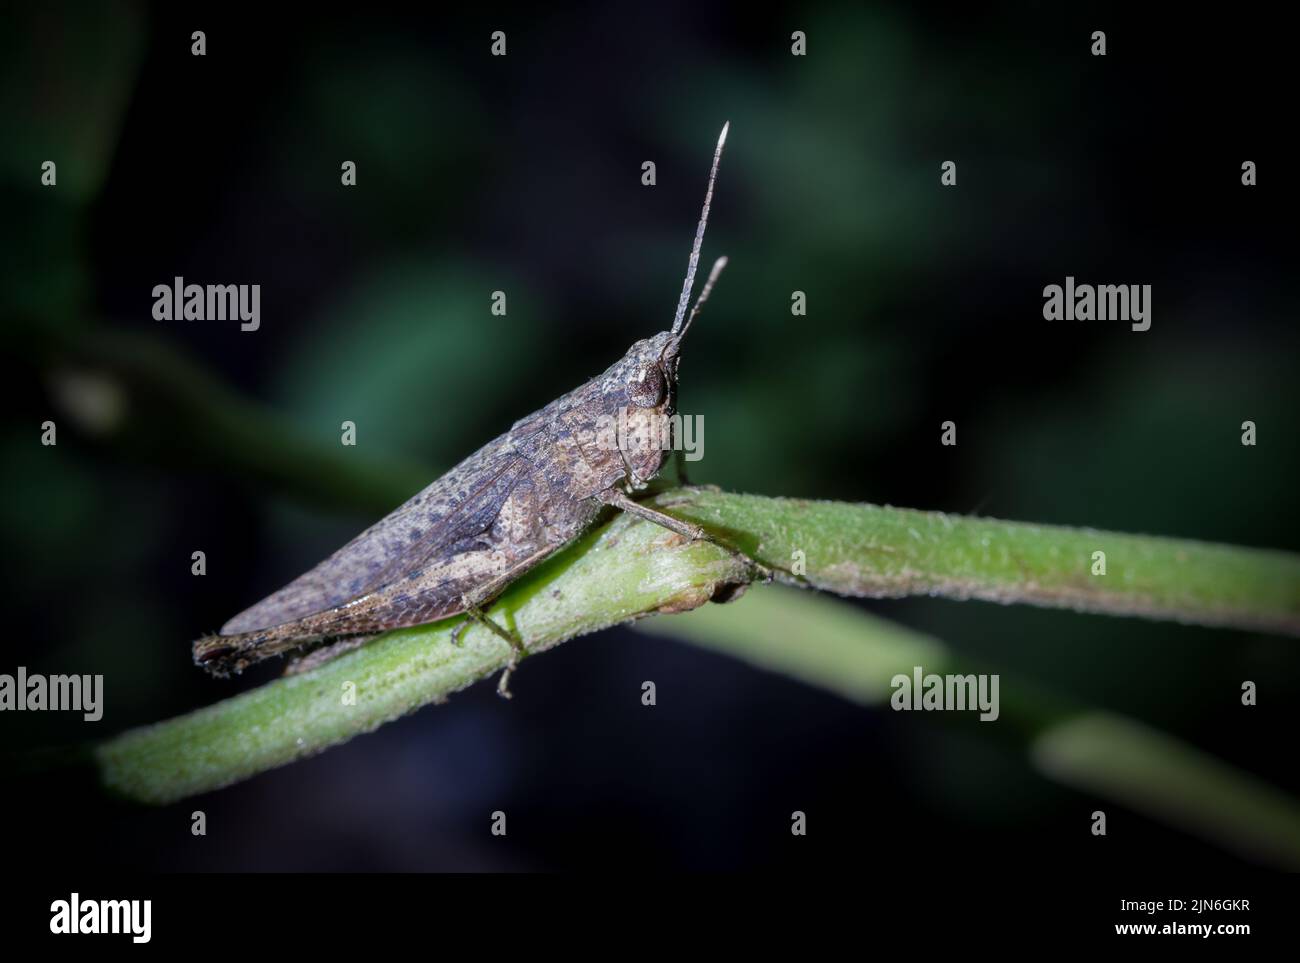 close up macro photo of a grasshopper. Stock Photo